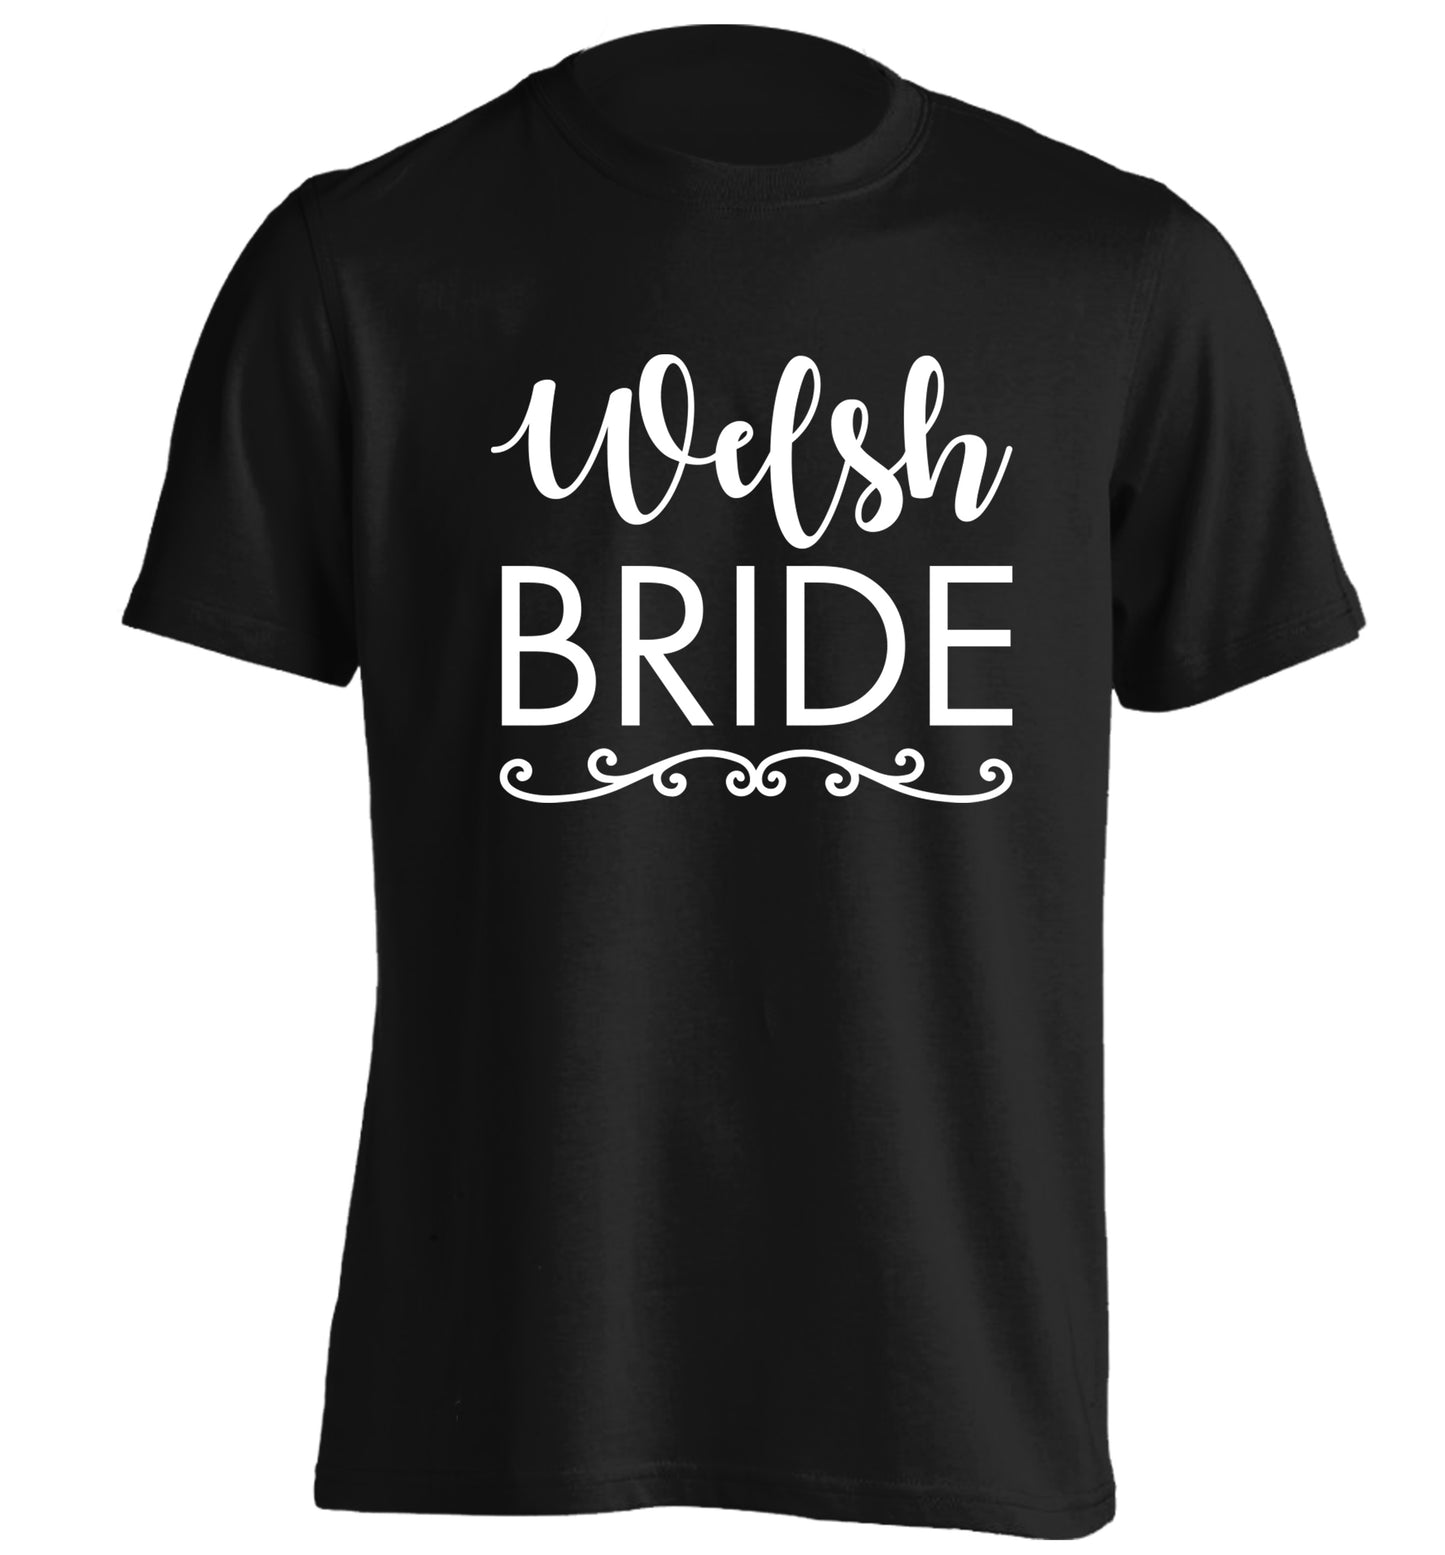 Welsh Bride adults unisex black Tshirt 2XL